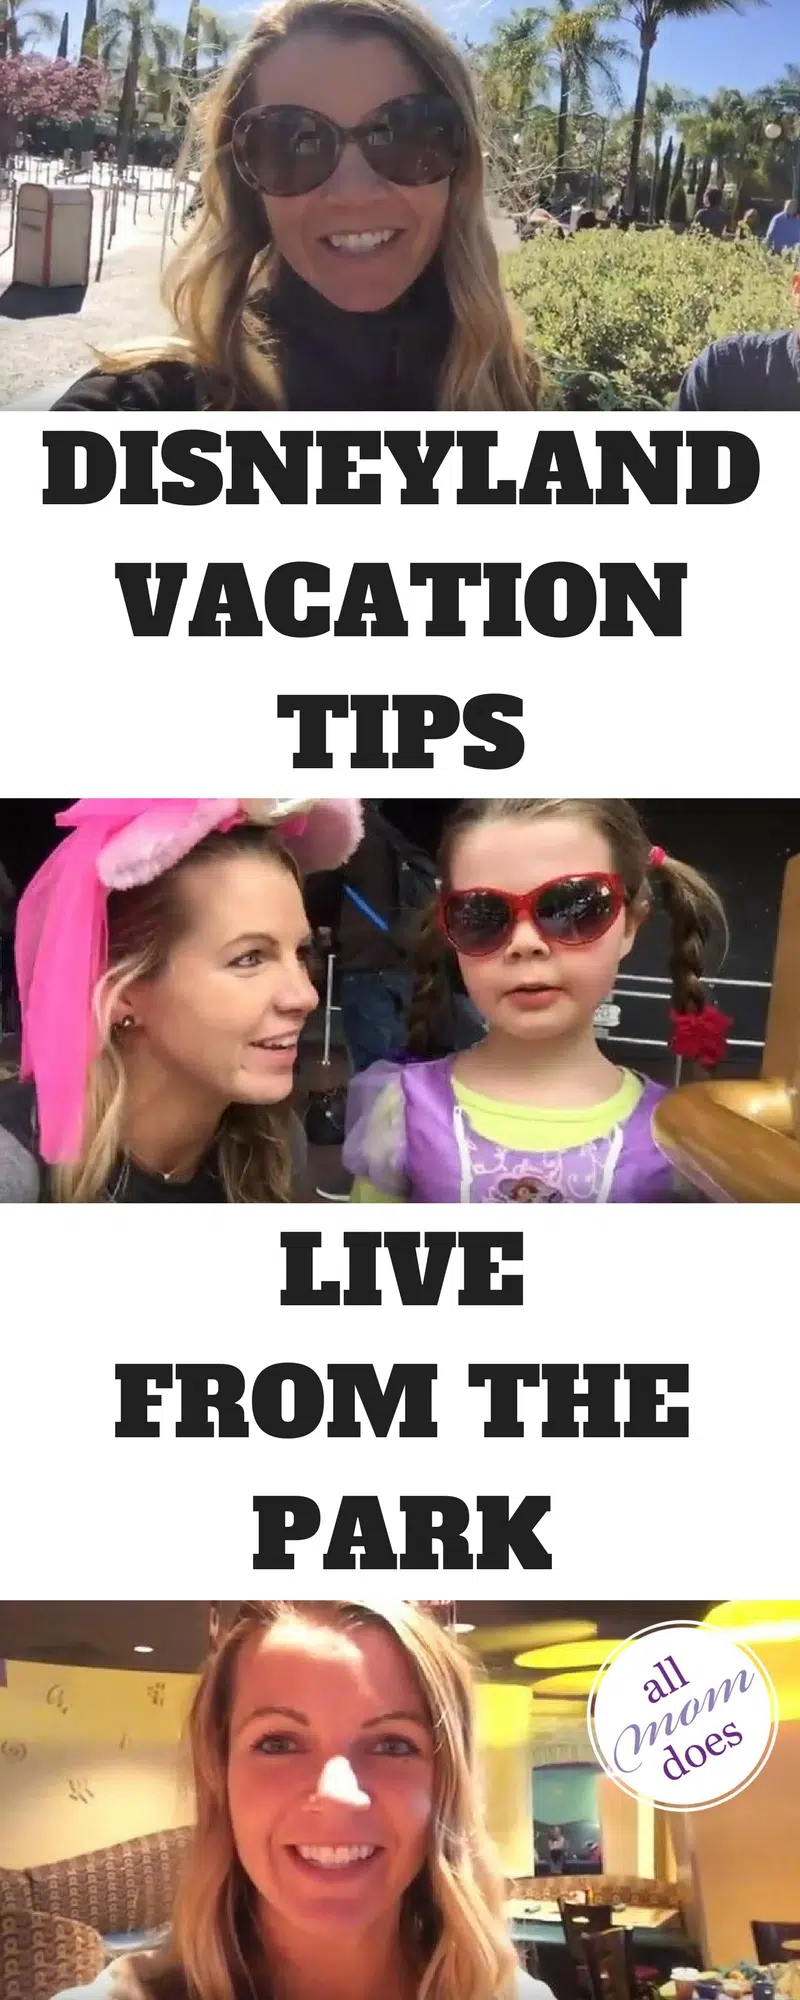 Disneyland Vacation Tips - Video from inside the park. #disneyland #vacation